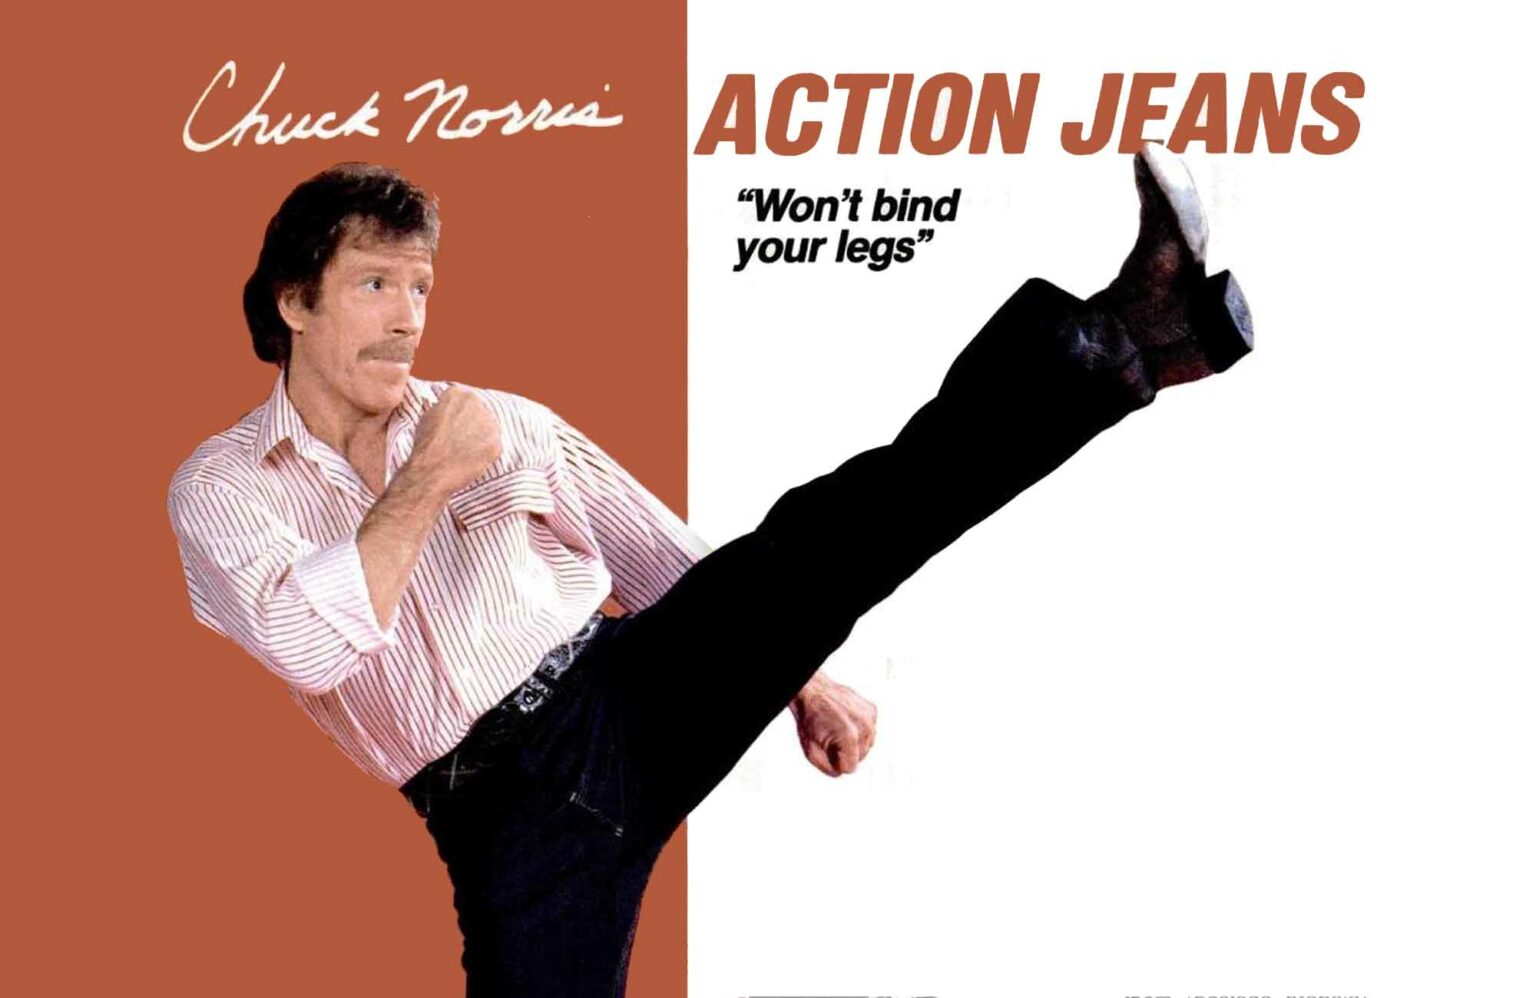 Chuck Norris Action джинсы